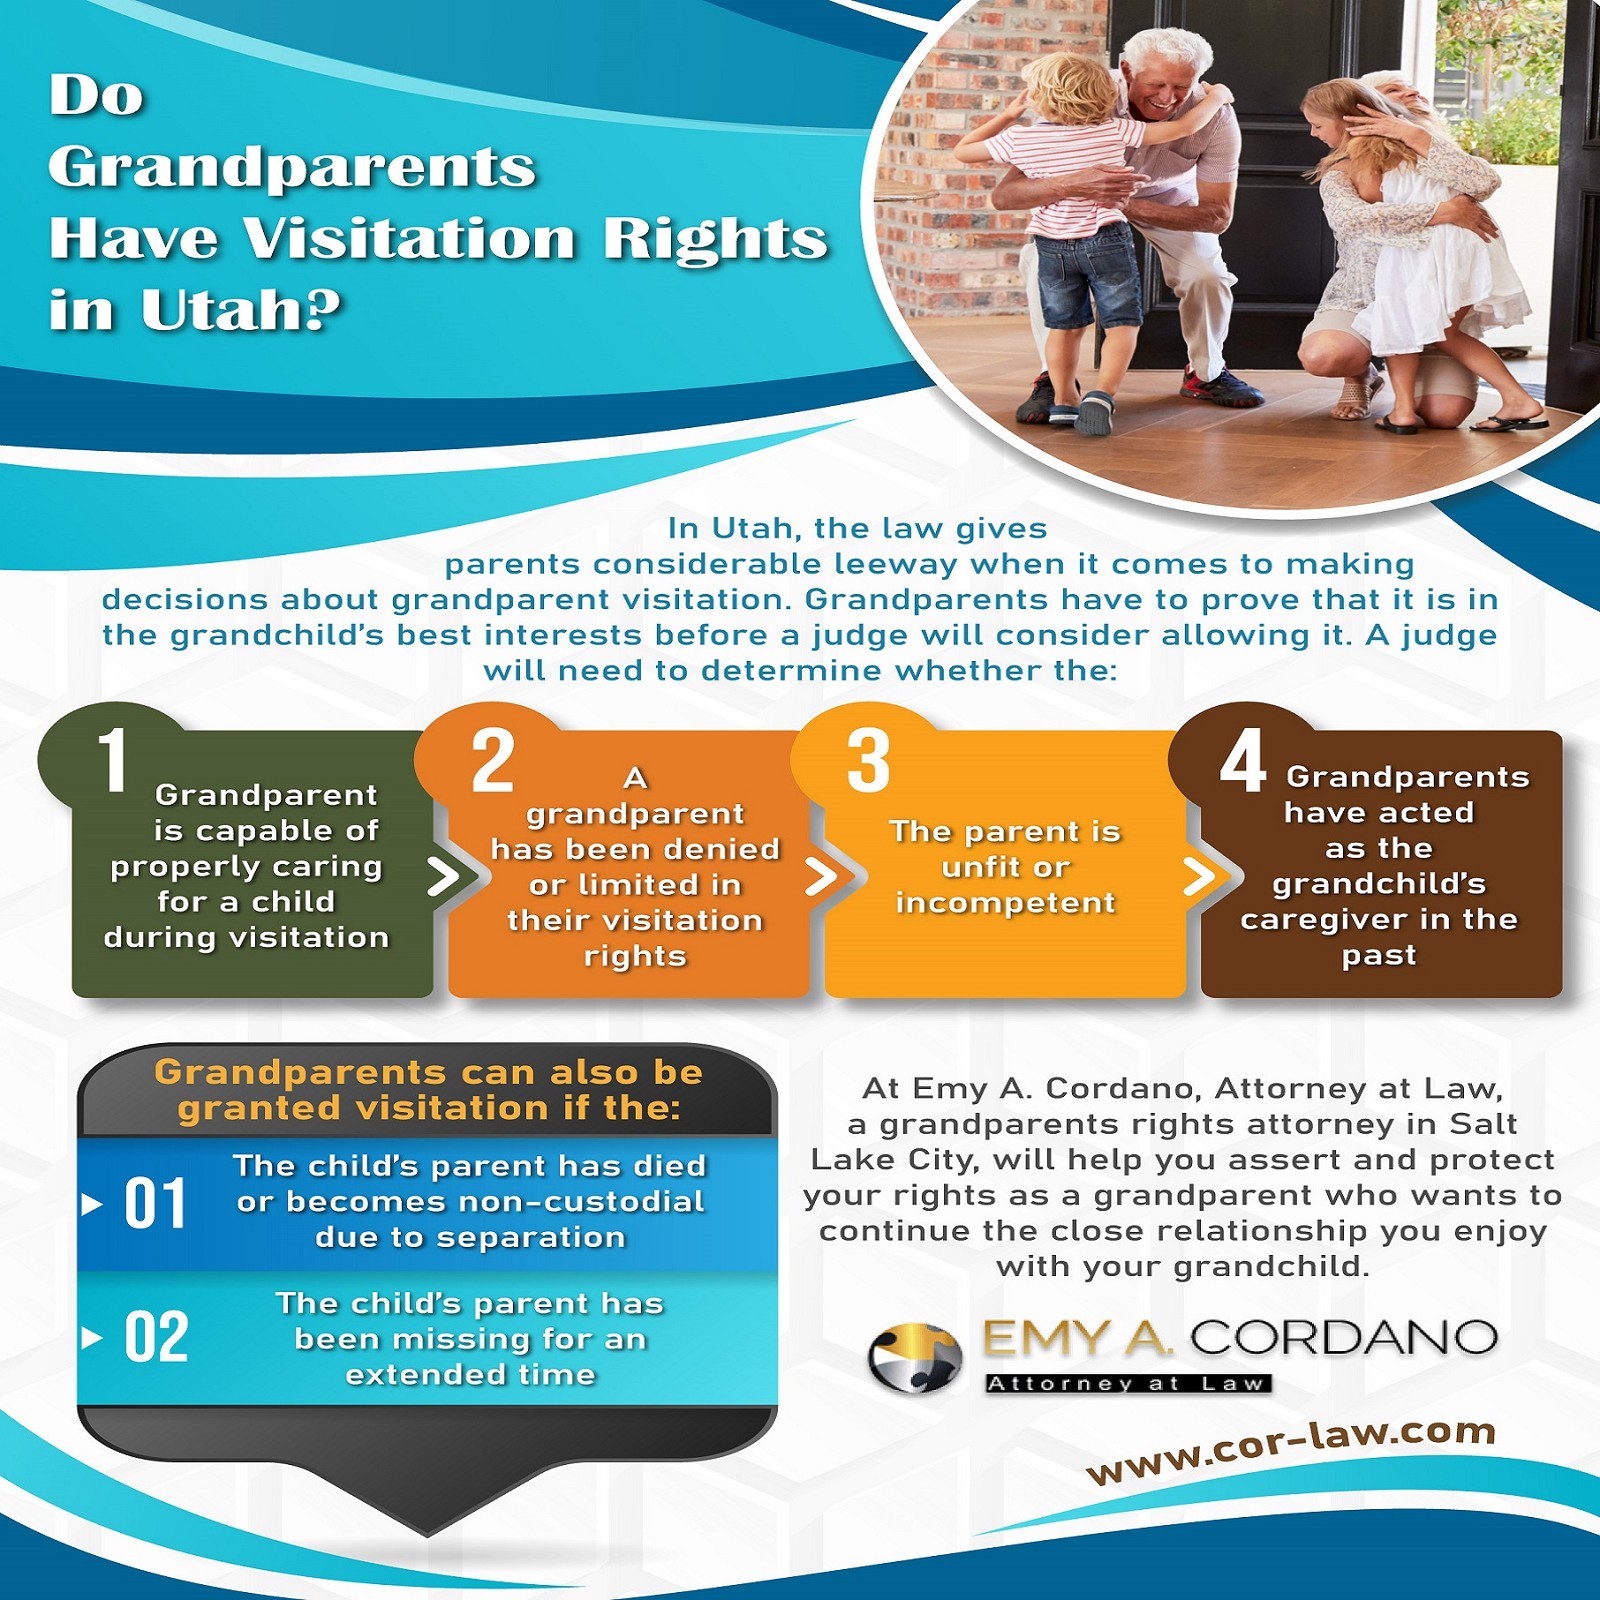 Do Grandparents Have Visitation Rights in Utah?